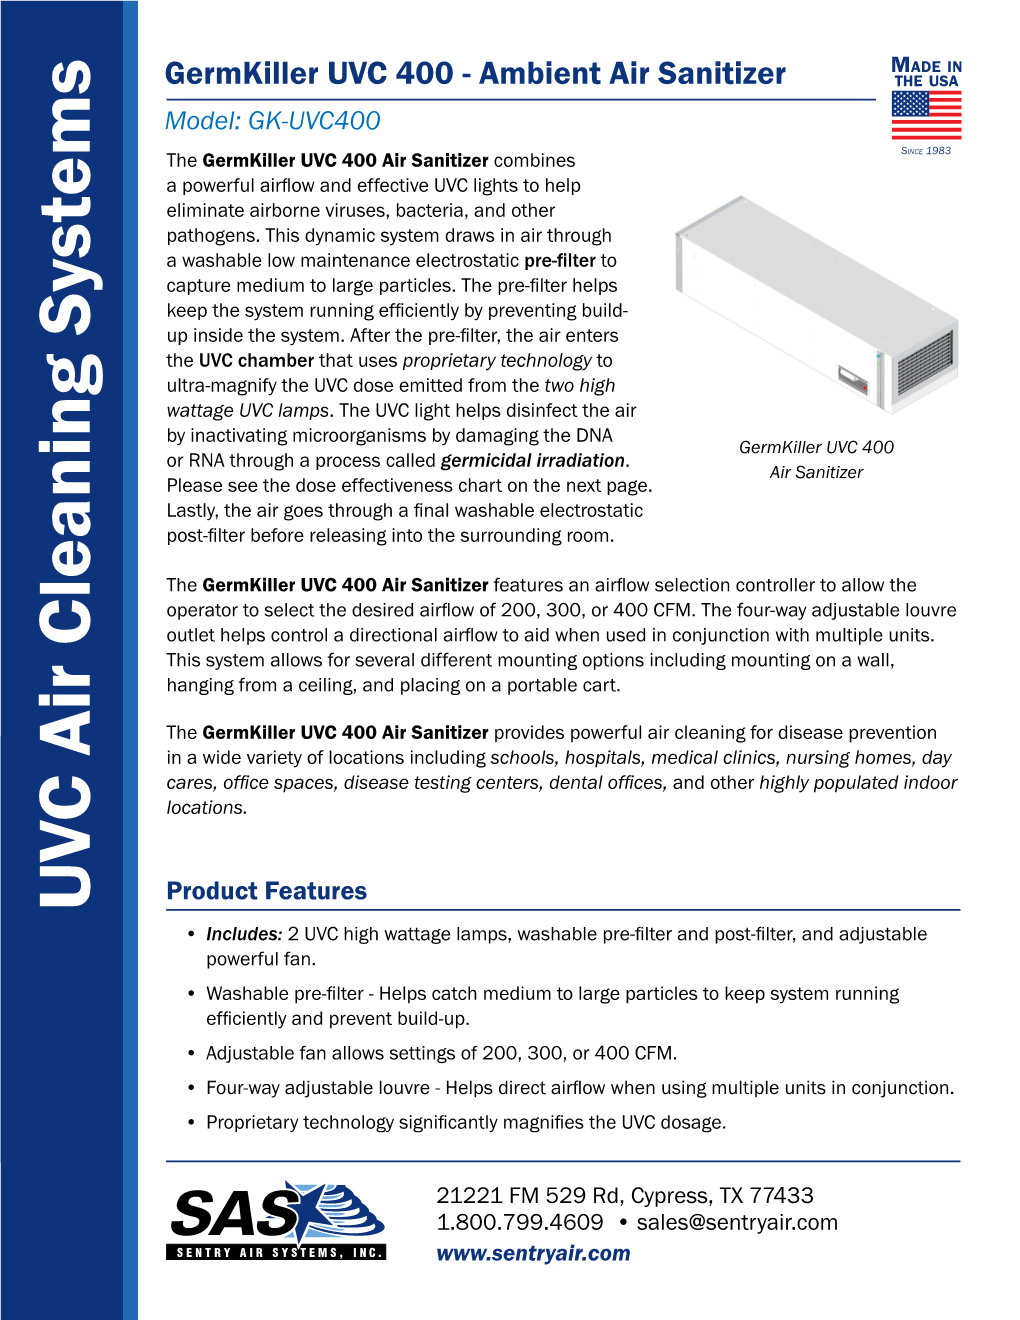 Germkiller UVC 400 - Ambient Air Sanitizer the USA Model: GK-UVC400